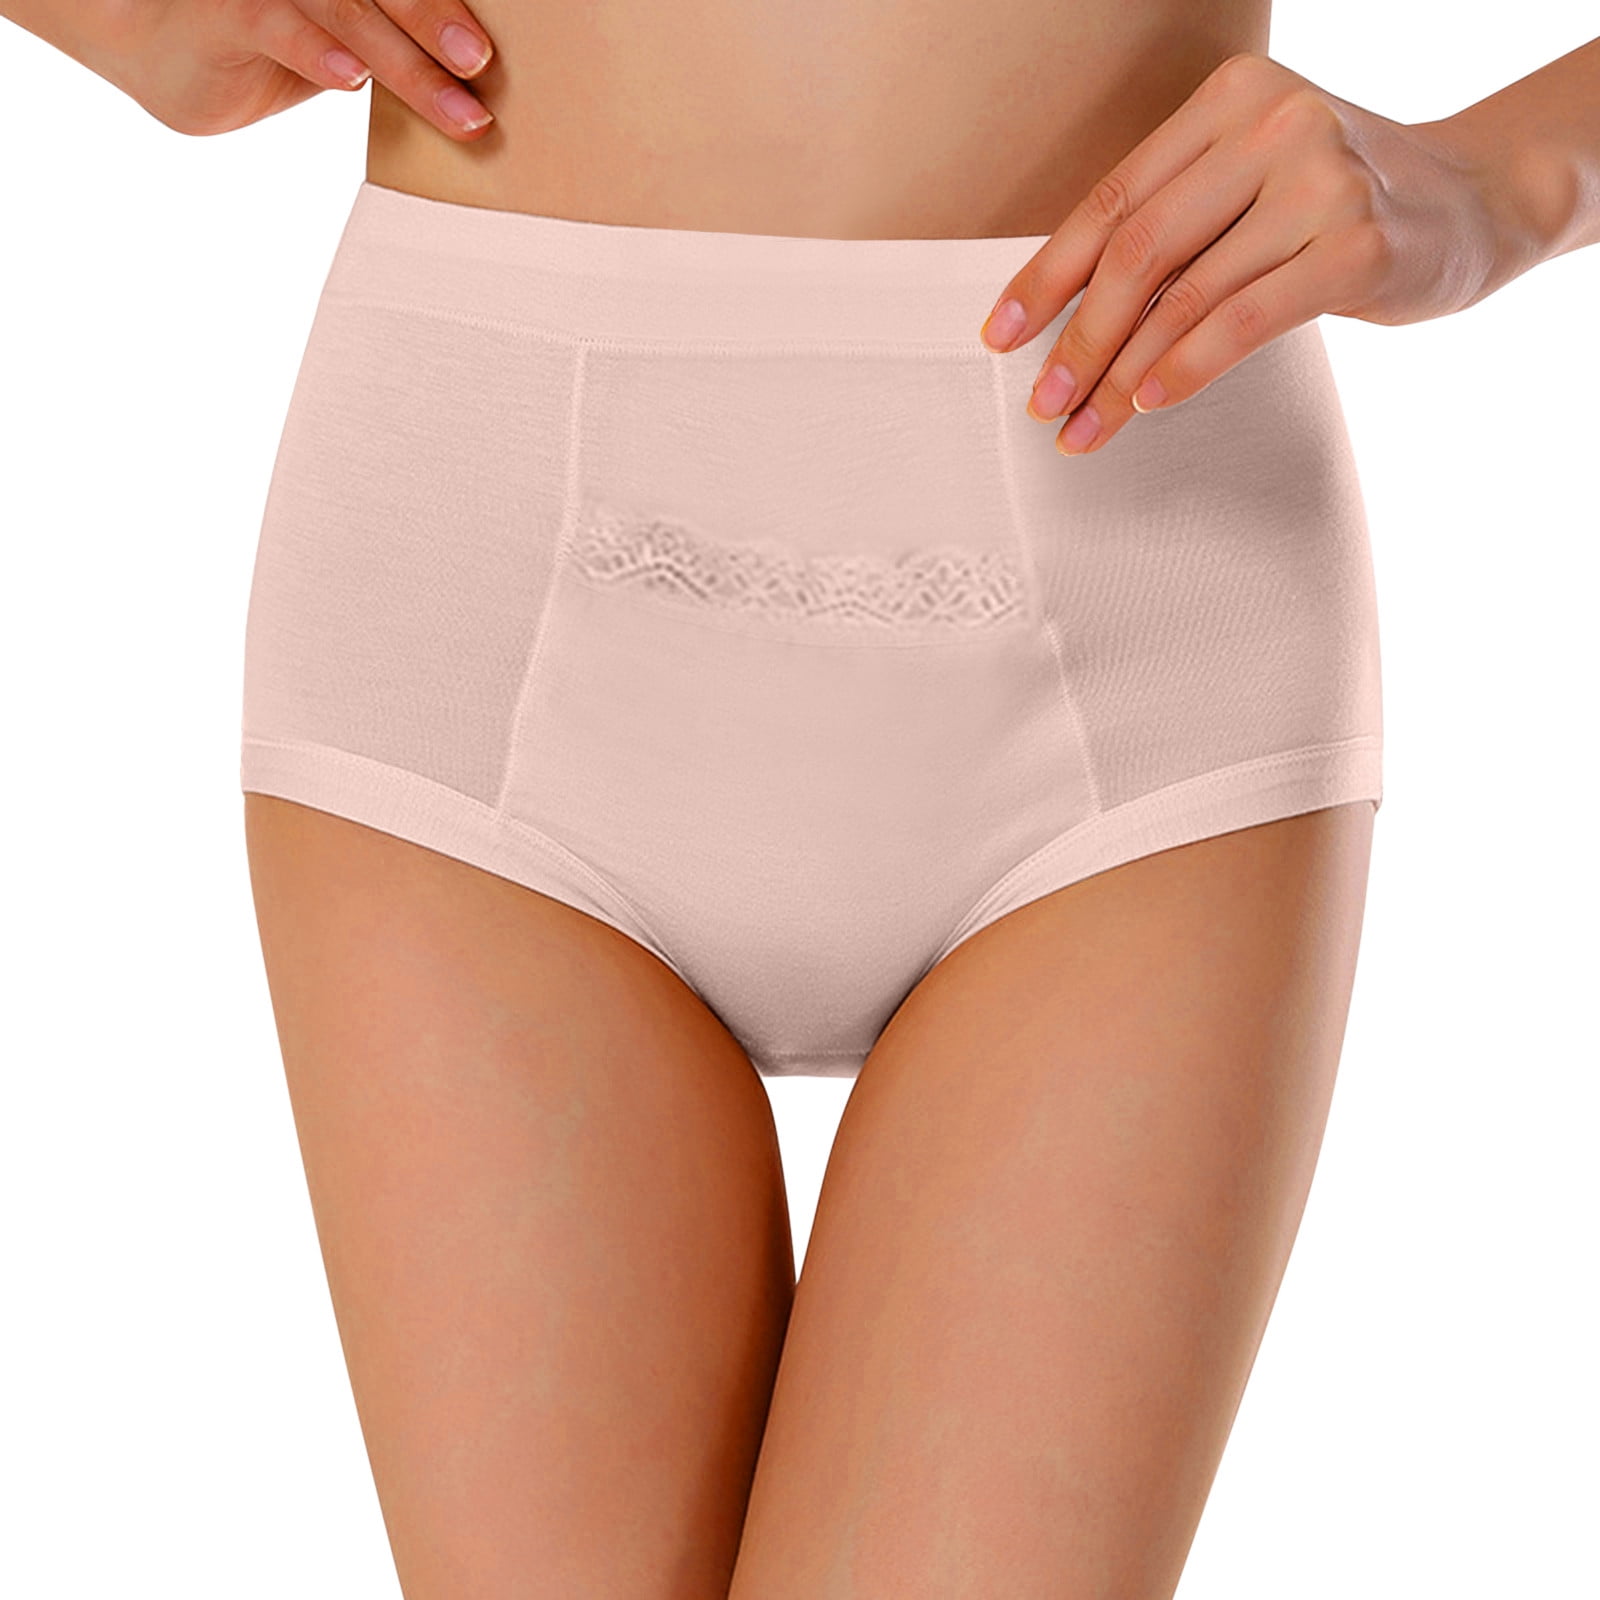 ZMHEGW 12 Packs Womens Underwear Seamless Menstrual Pocket Pocket